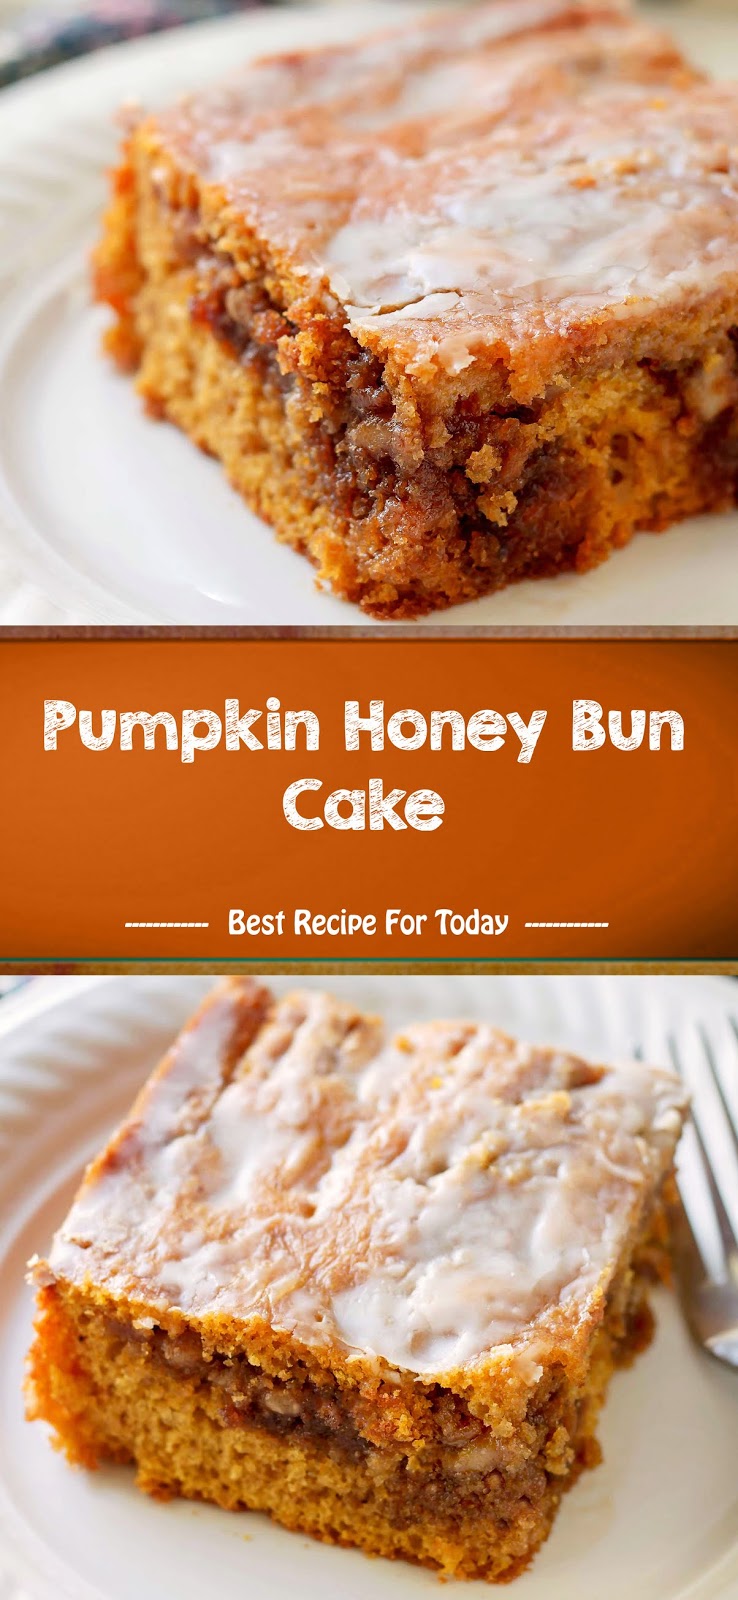 Pumpkin Honey Bun Cake | Healthy Recipes